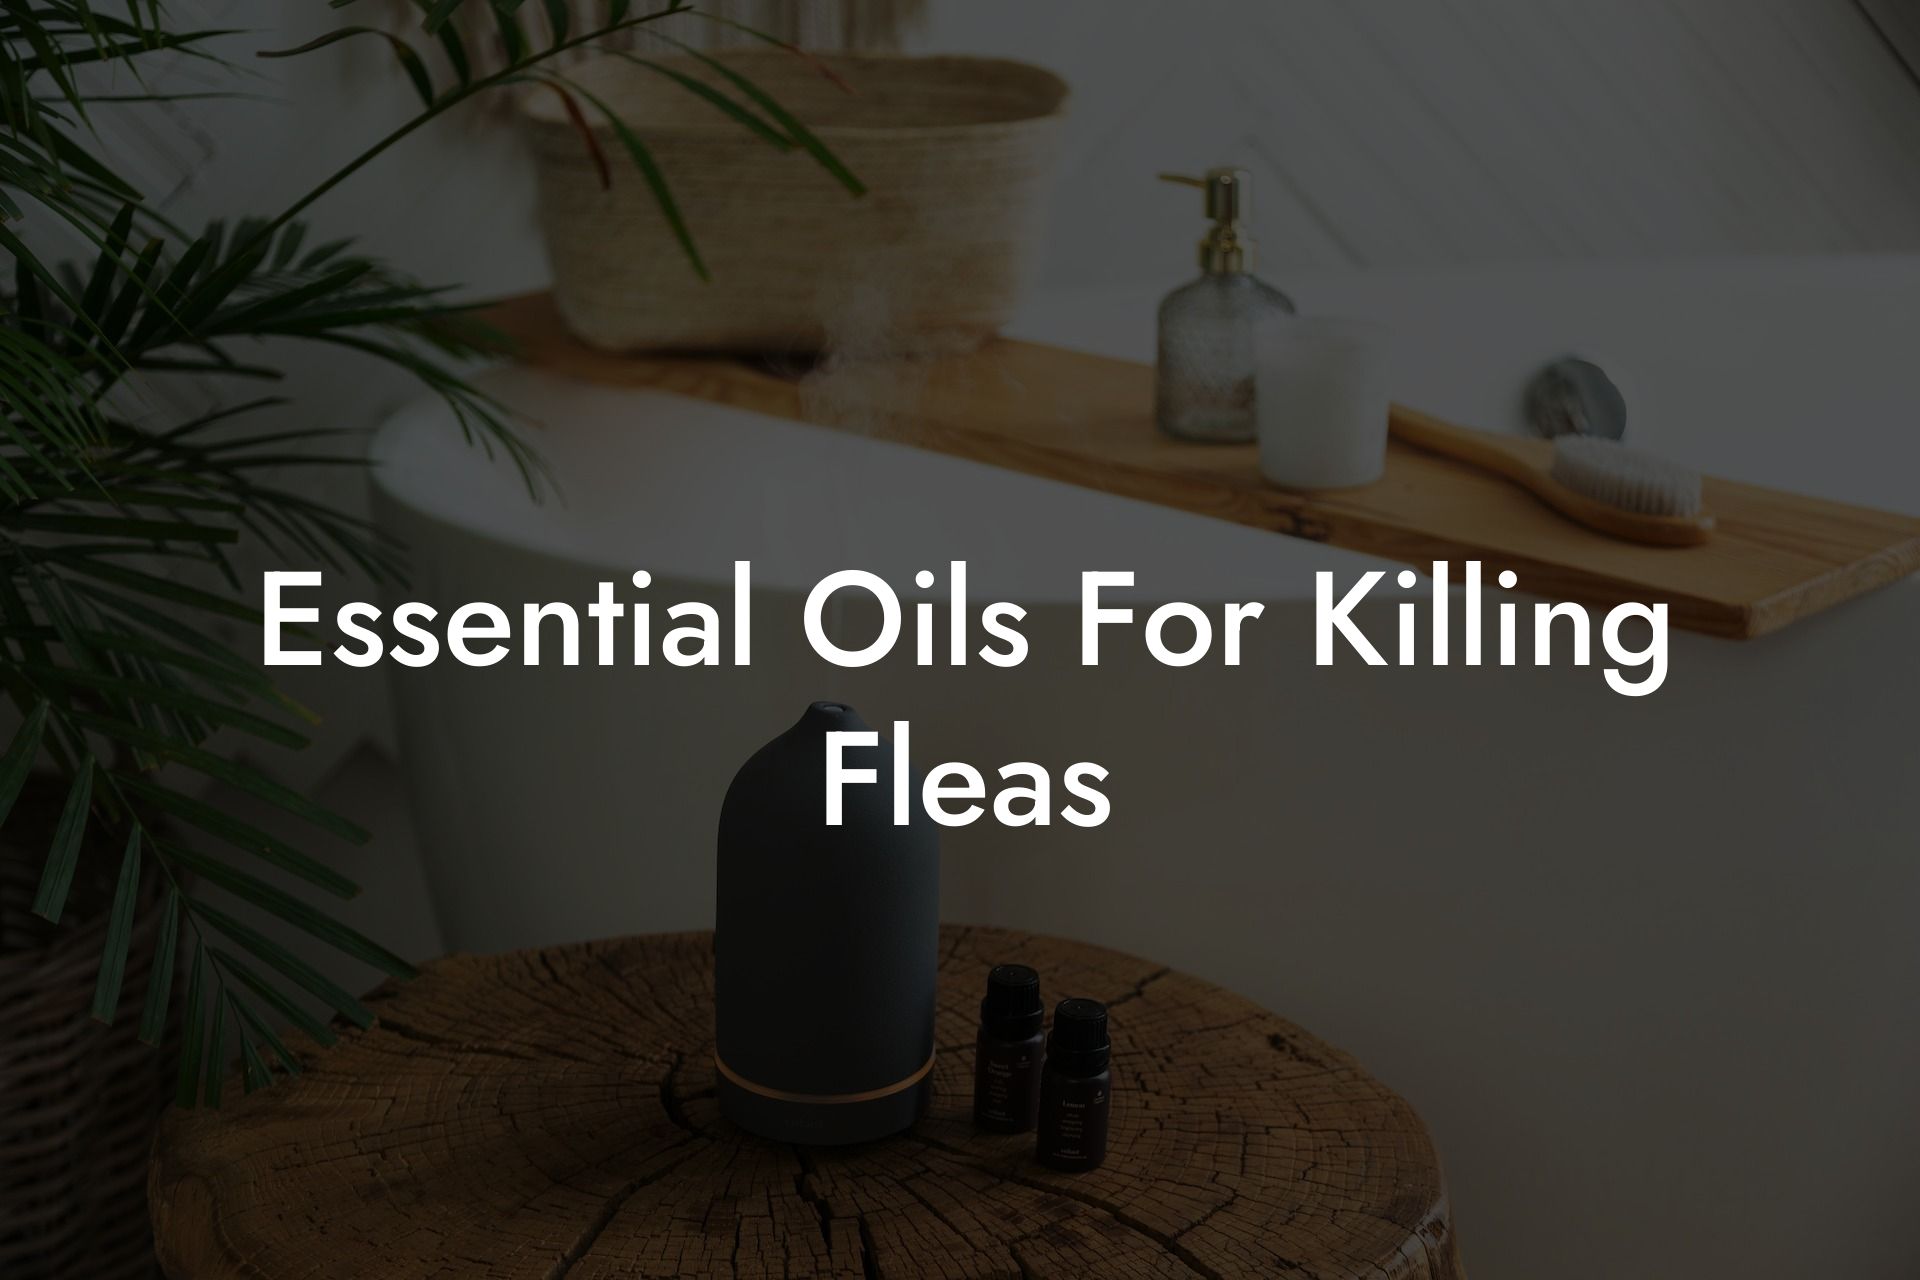 Essential Oils For Killing Fleas